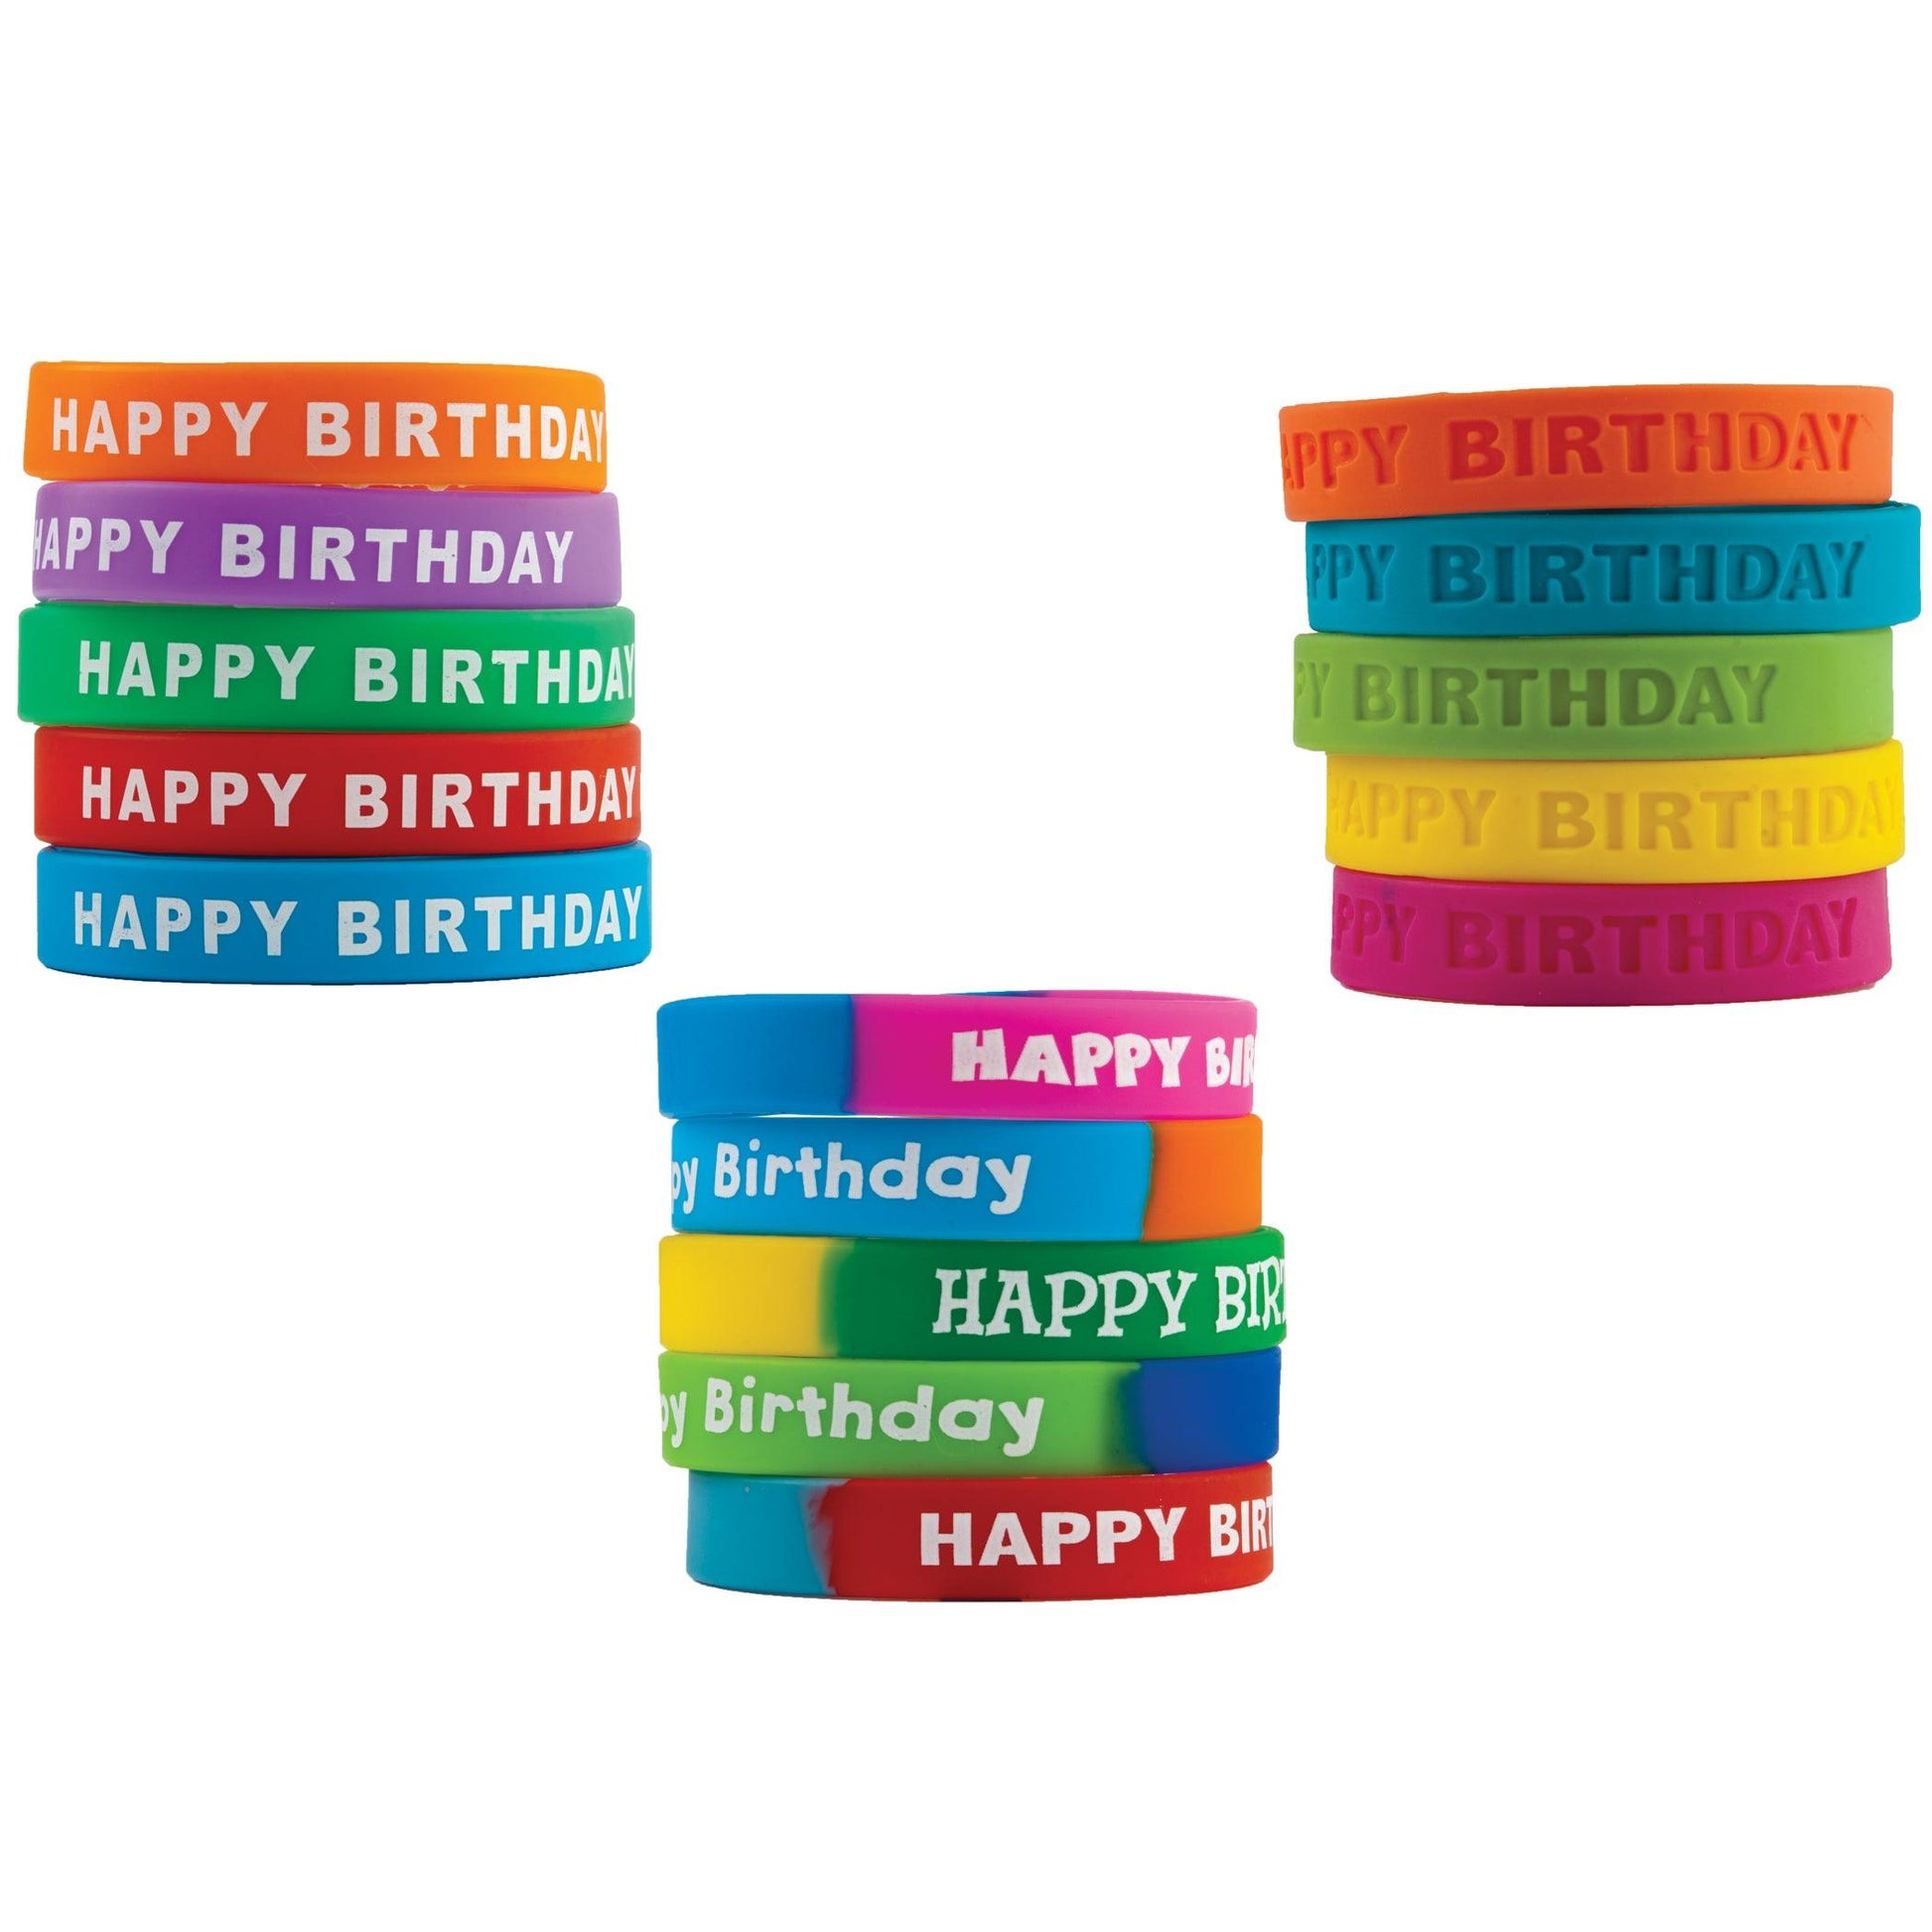 Happy Birthday Wristband Classroom Super Pack, Pack of 30 - Loomini